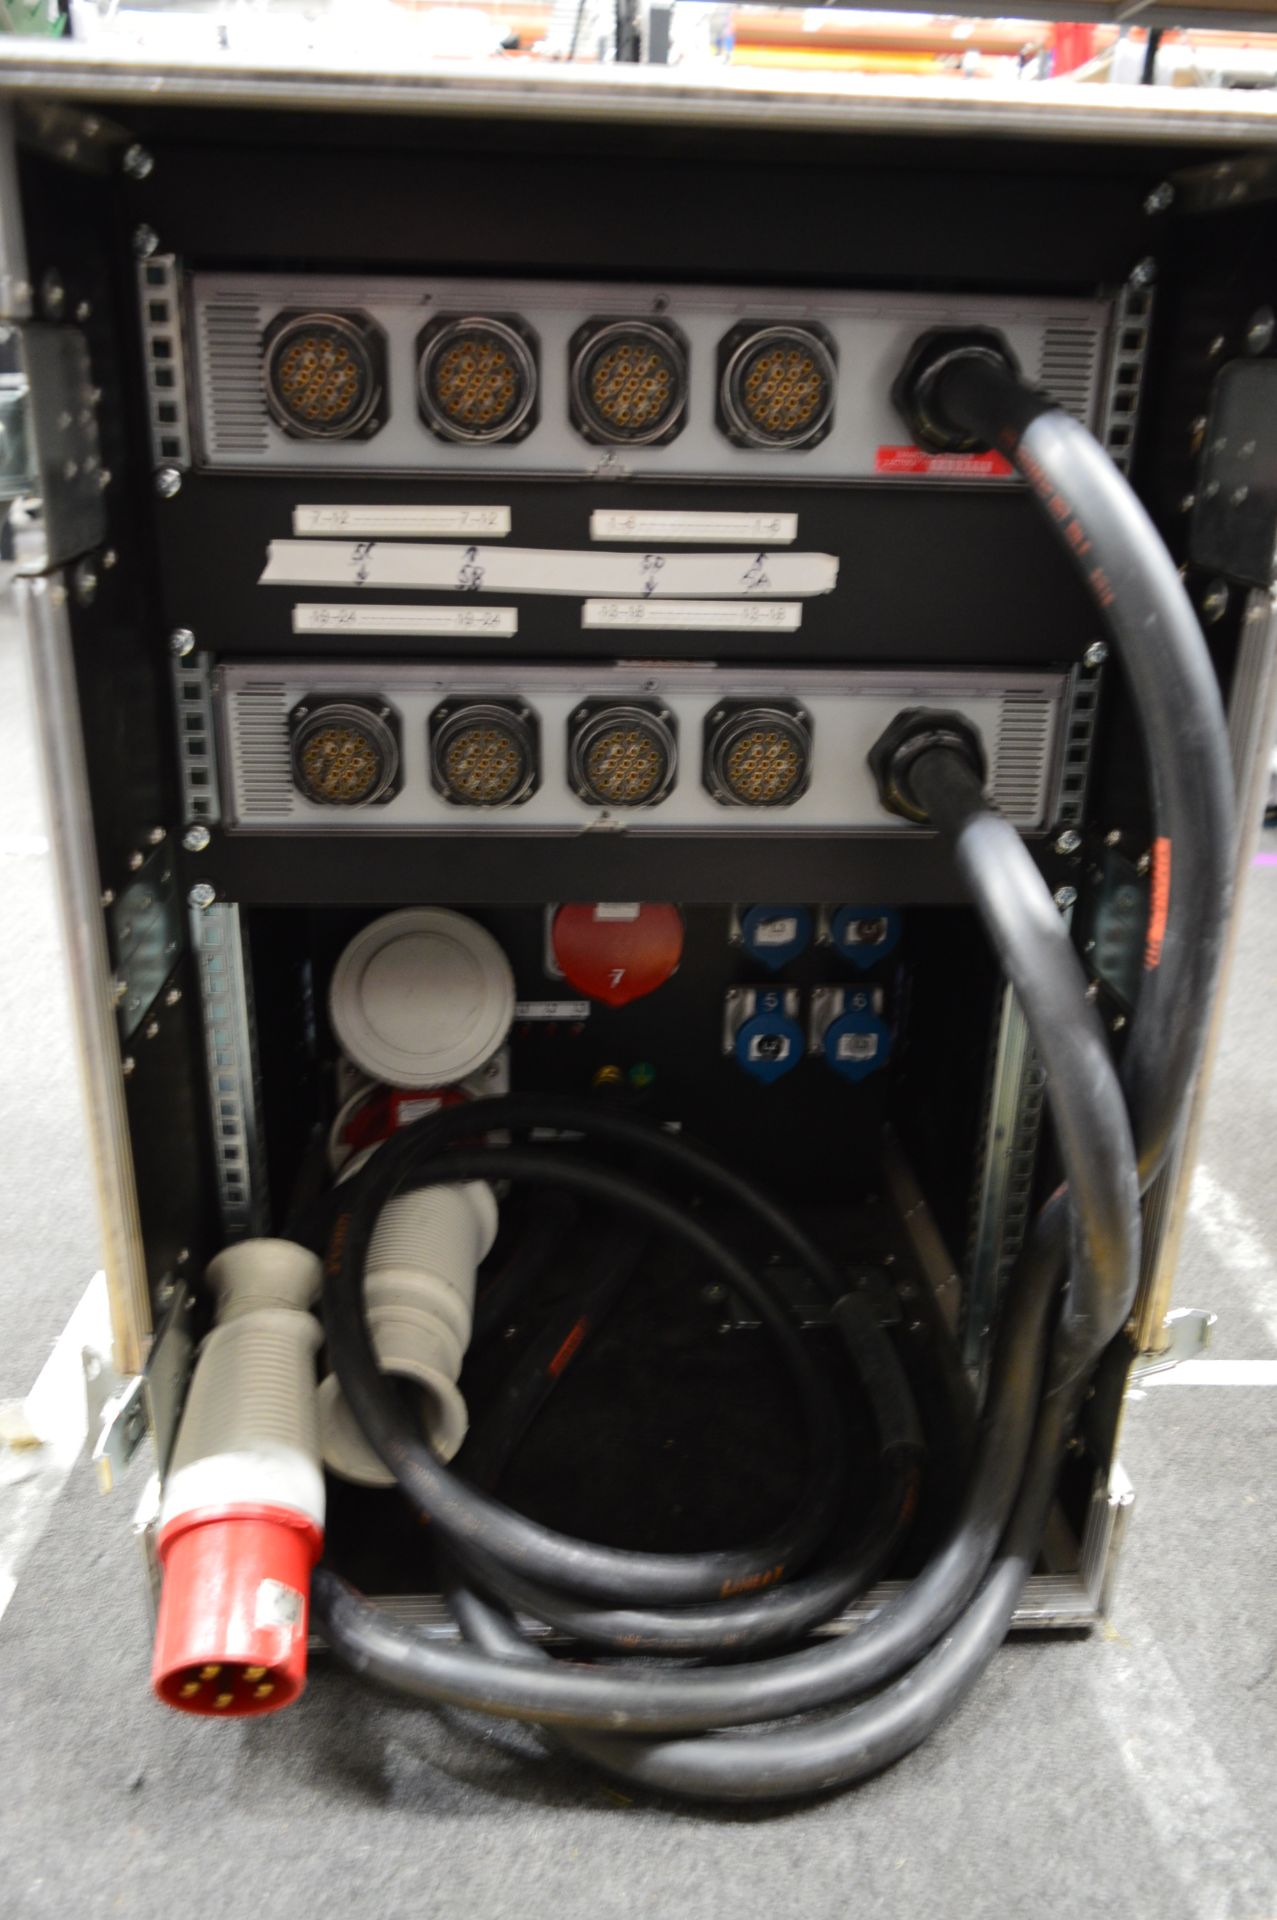 2x No. Electronic Theatre Controls (ETC), Smartpac - Image 2 of 3